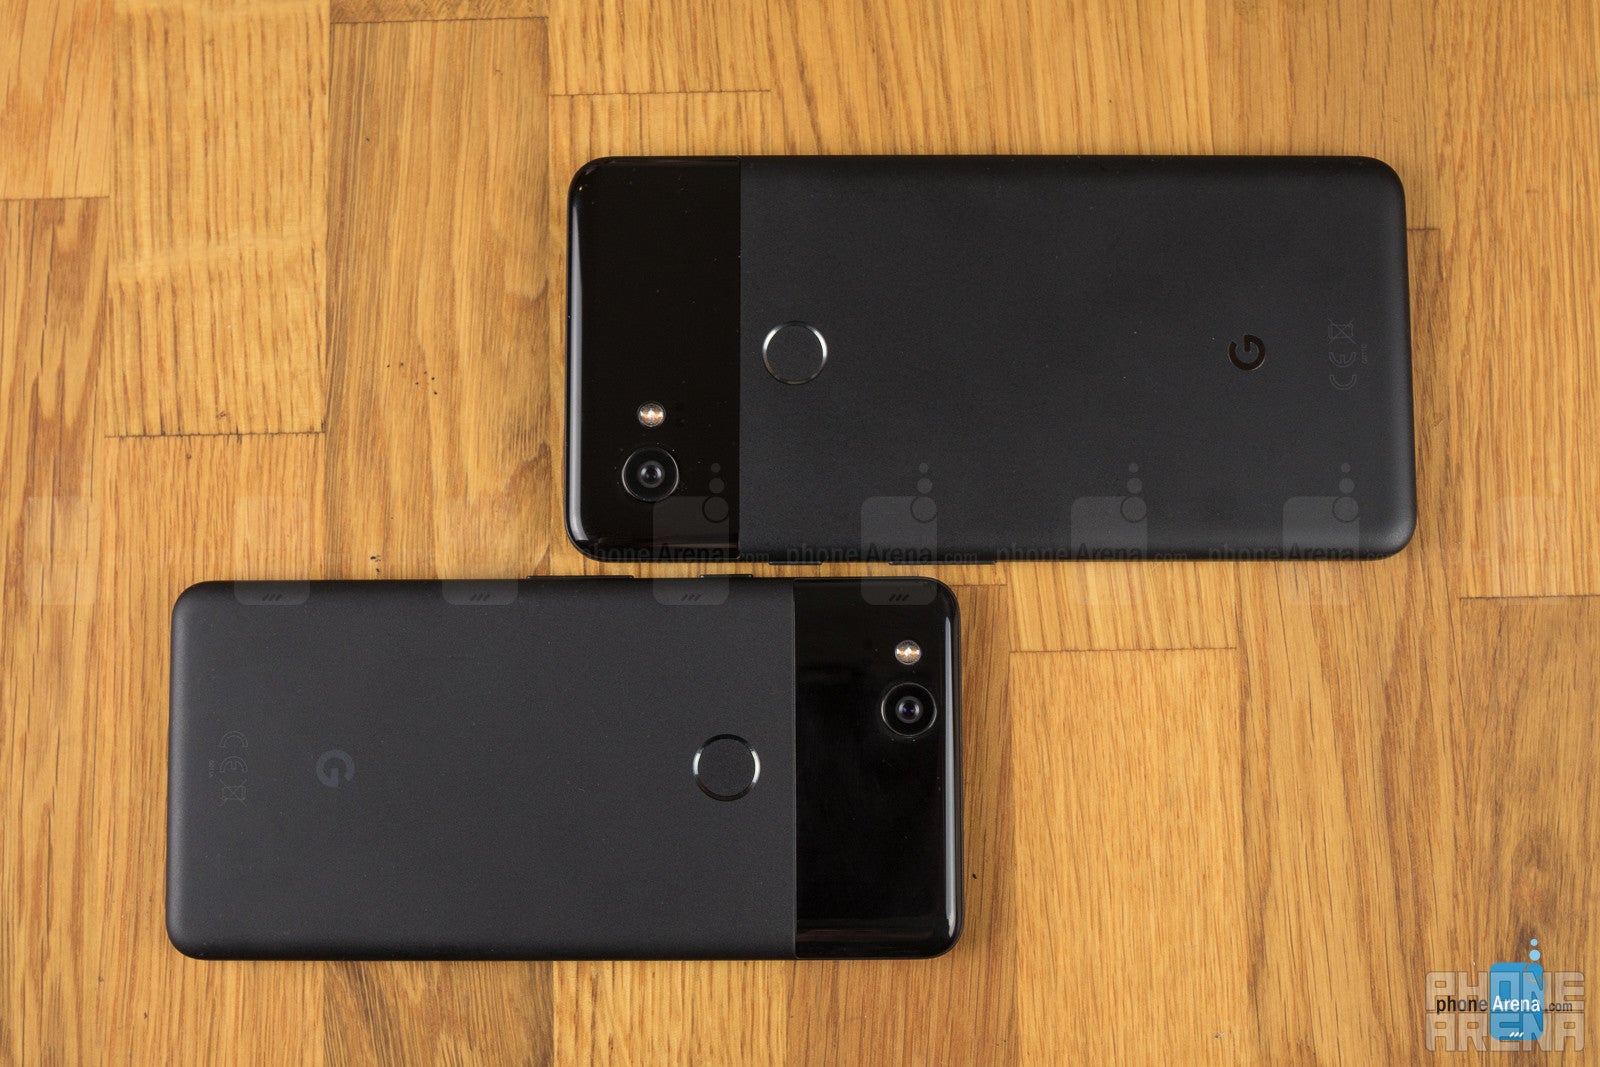 Google Pixel 2 and Pixel 2 XL Review